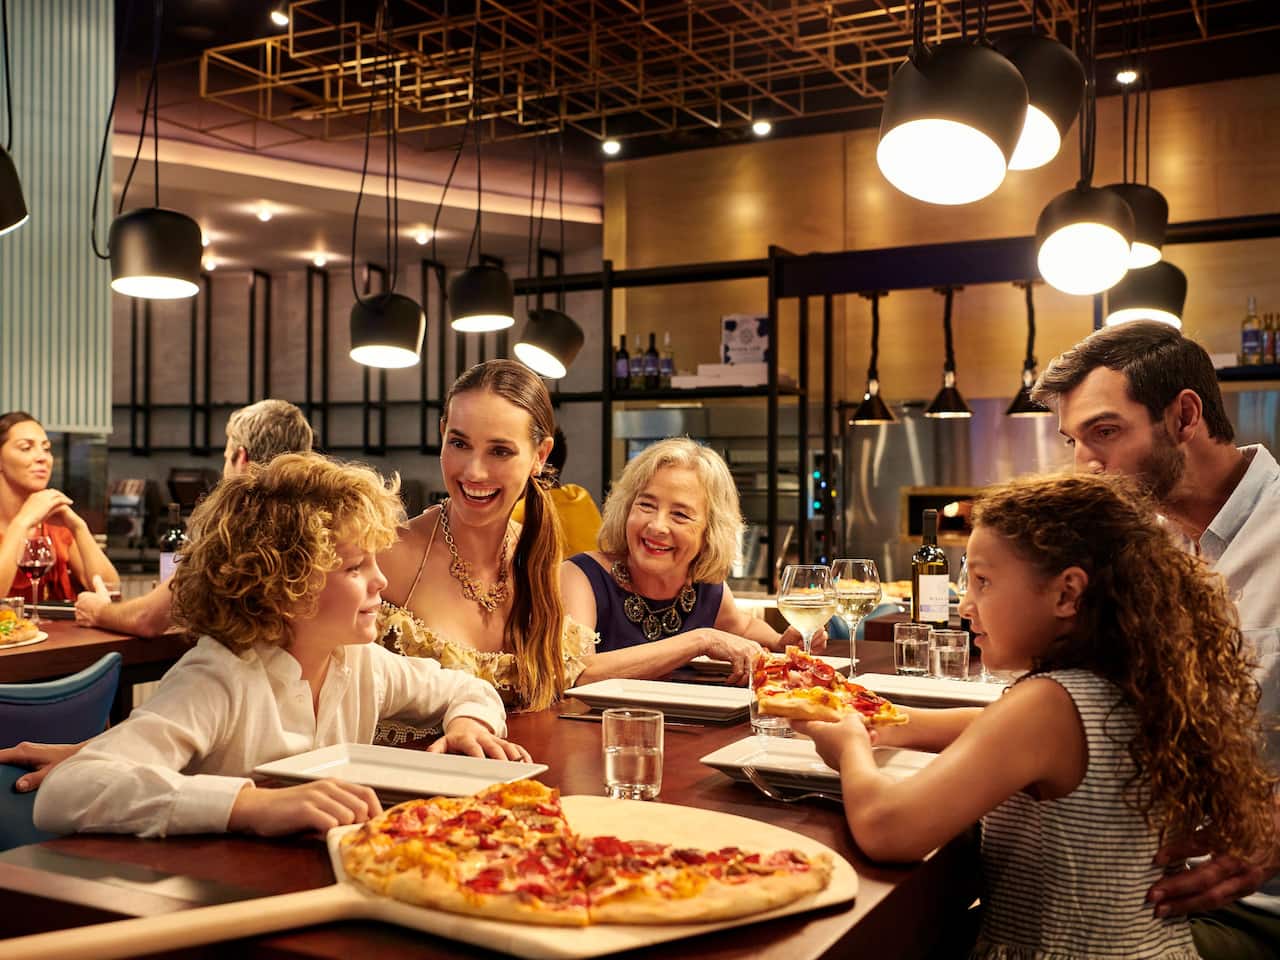 A family enjoying pizza at a restaurant in the Bahamas